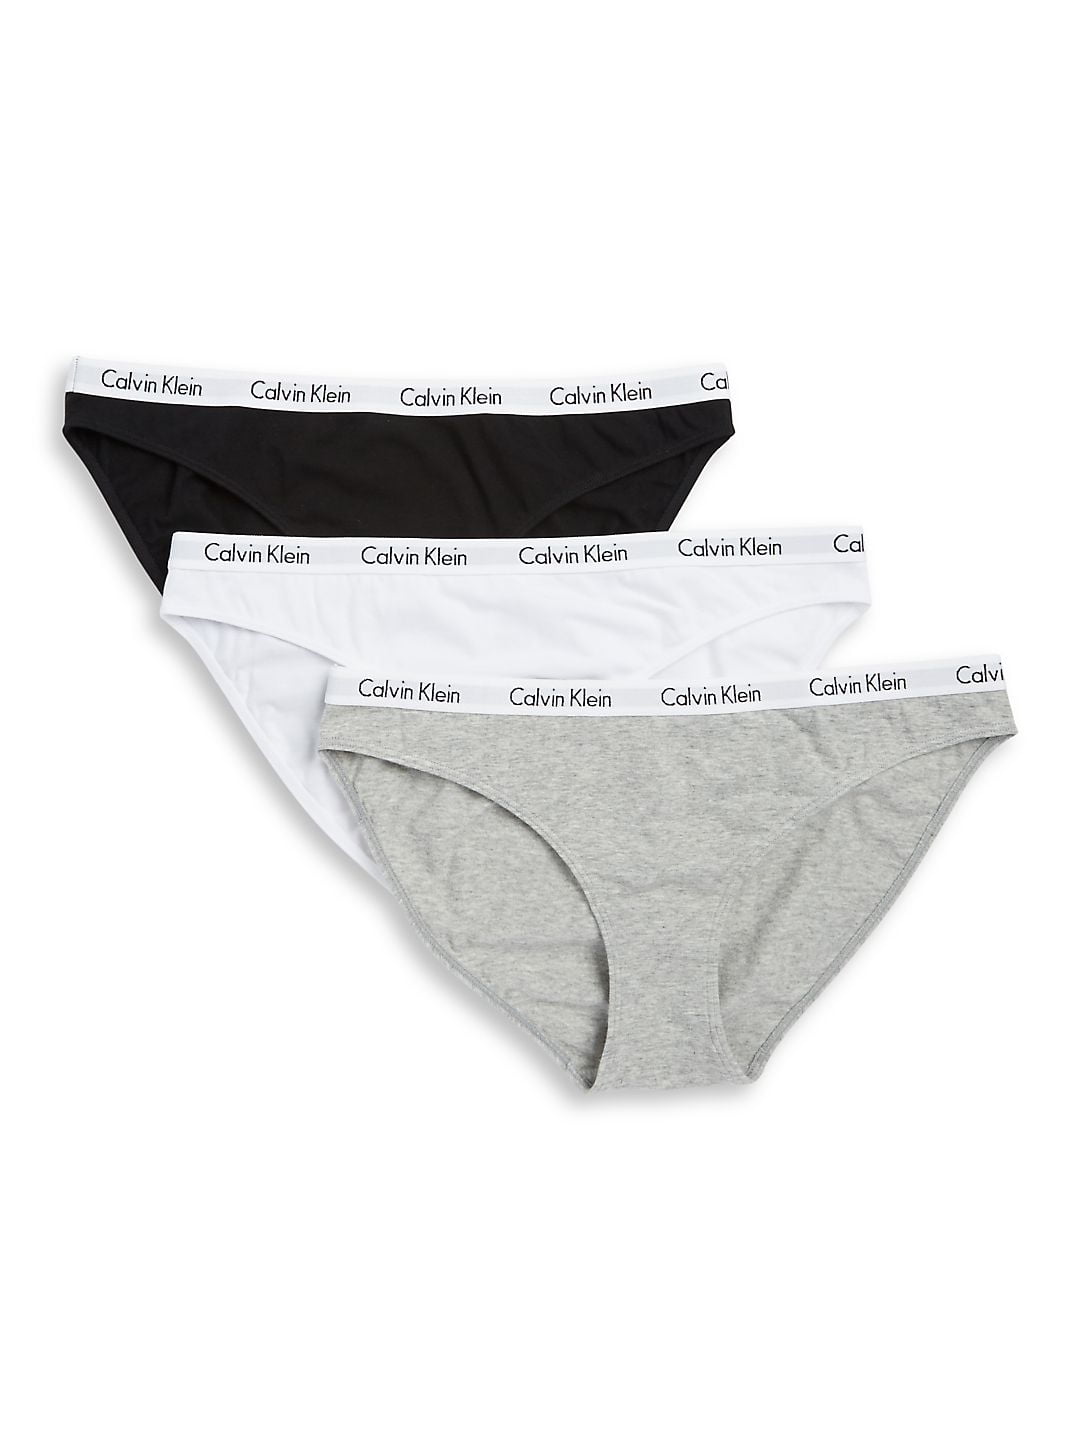 Calvin Klein Underwear Women's Carousel 3 Pack Panties, Multi